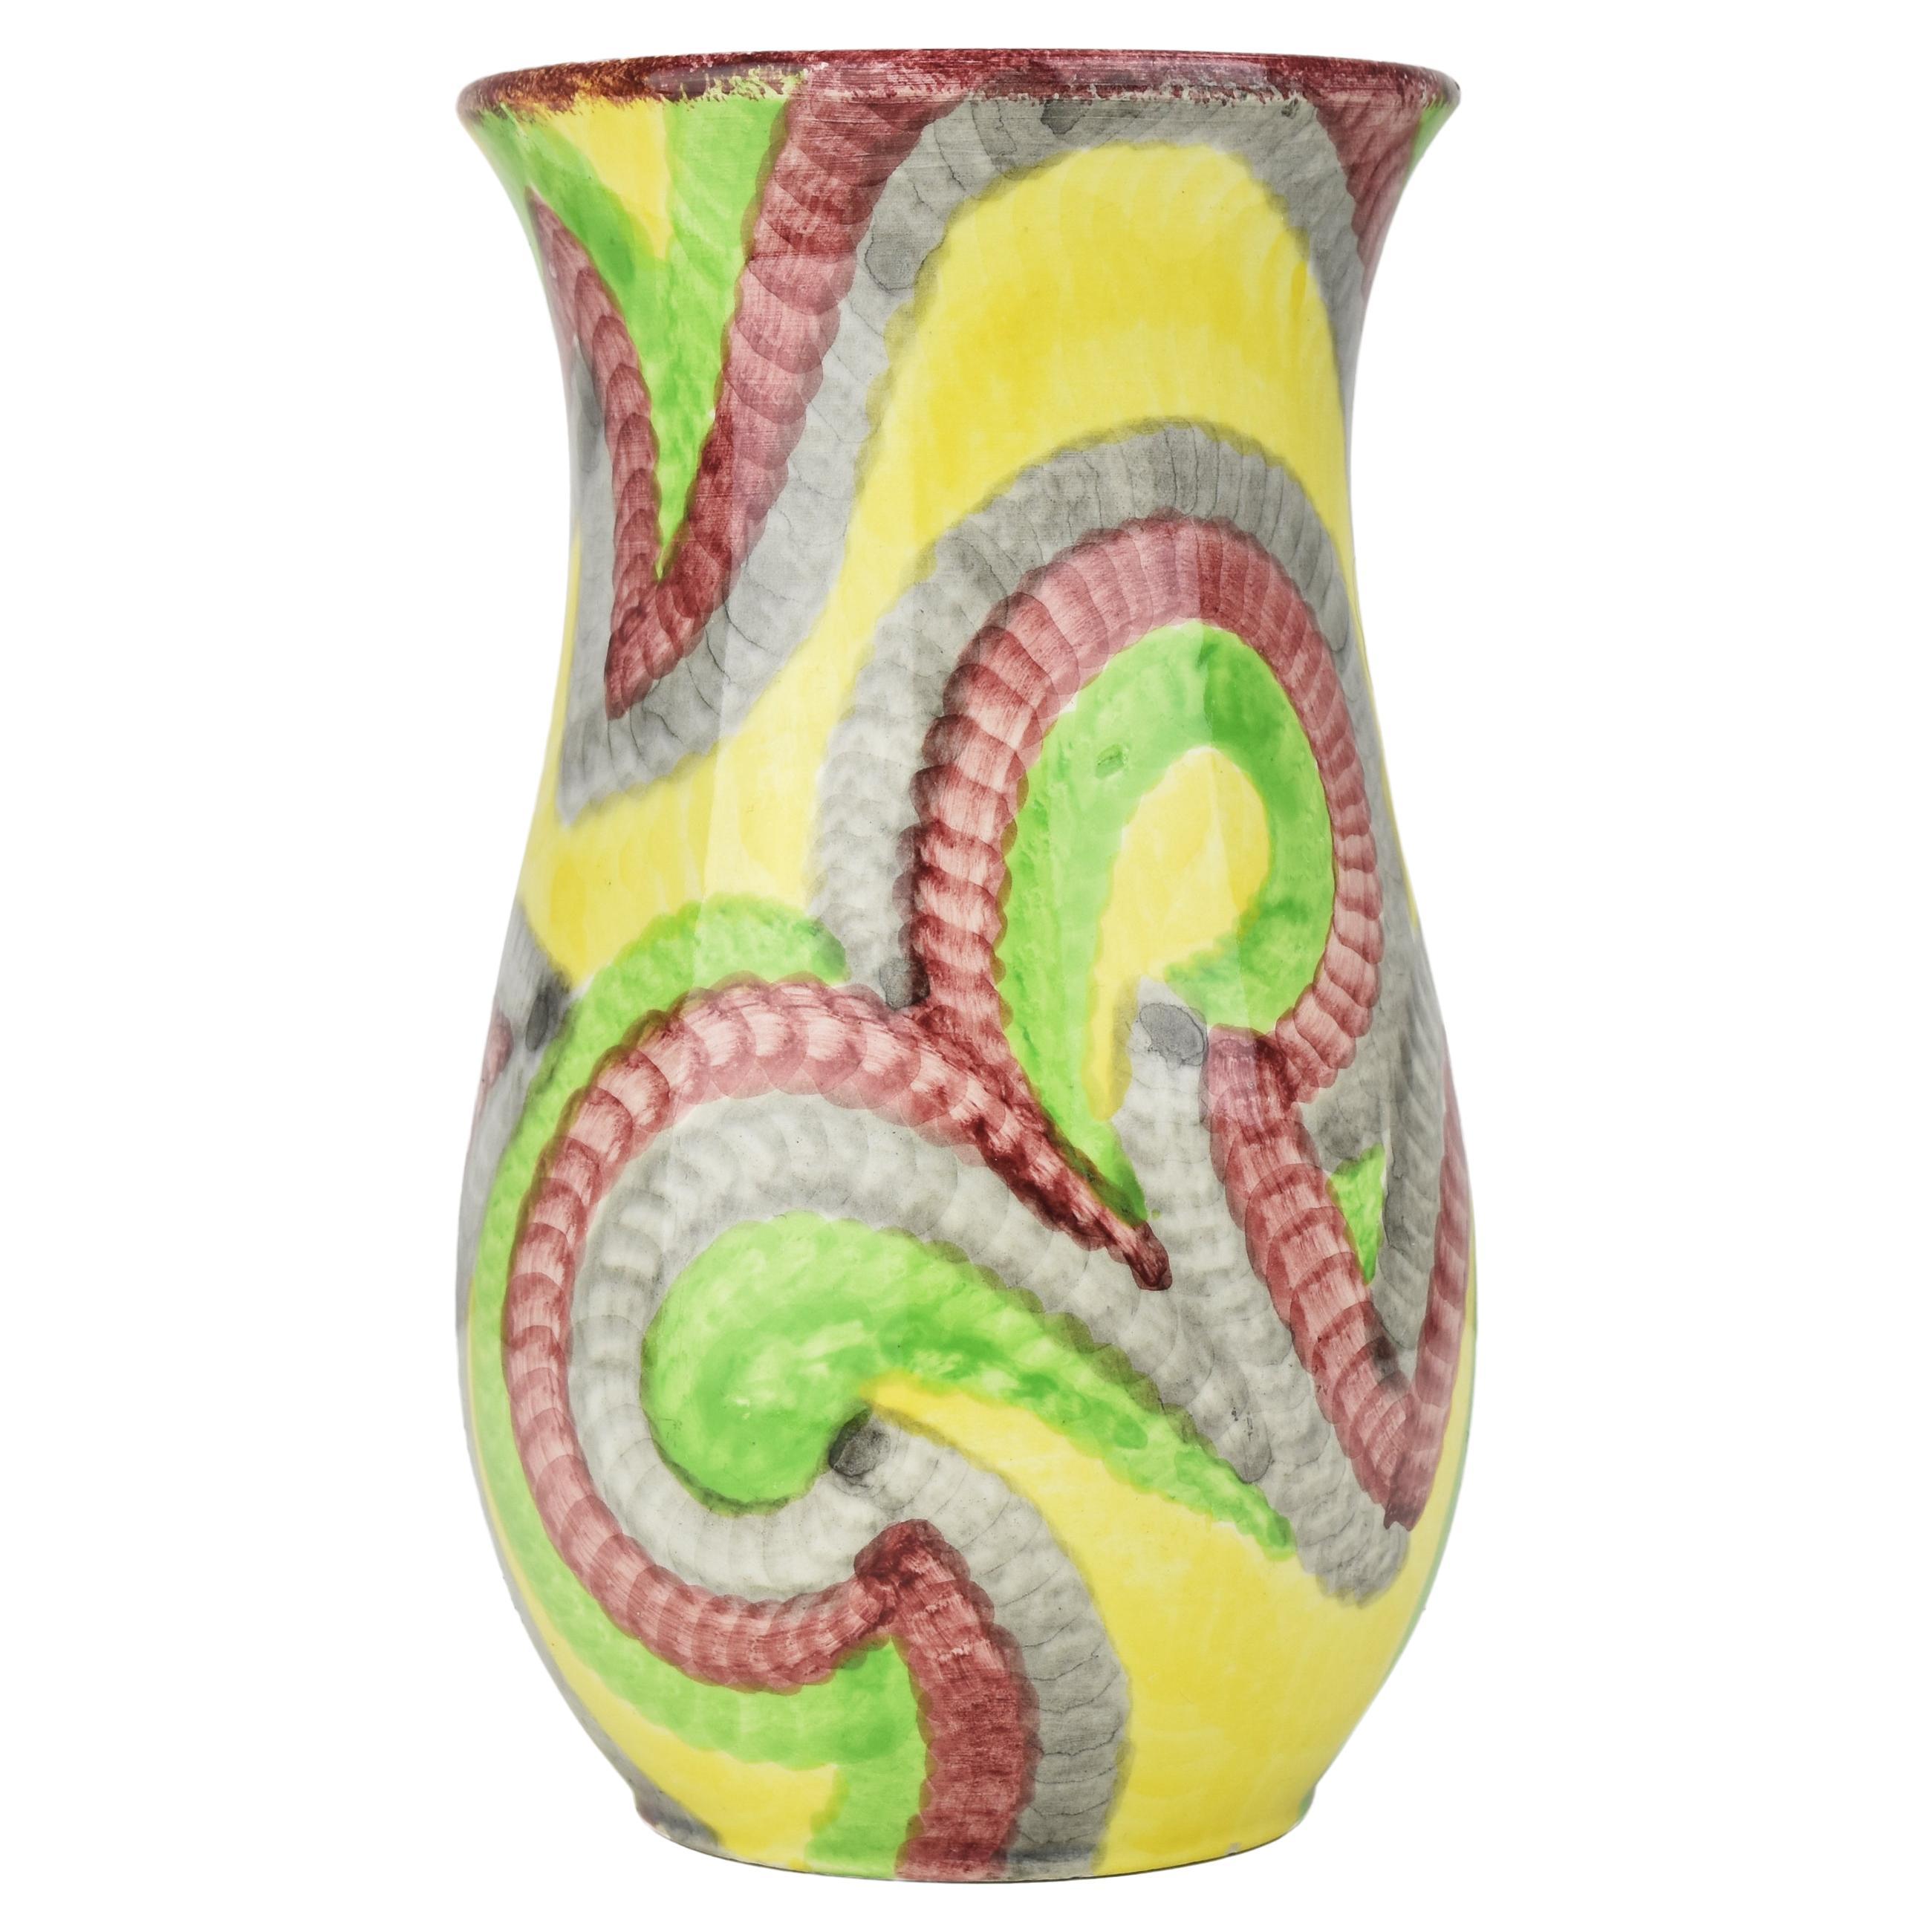 Schramberg Eva Zeisel Gobelin Majolica Ceramic Vase Art Deco Bauhaus Era For Sale